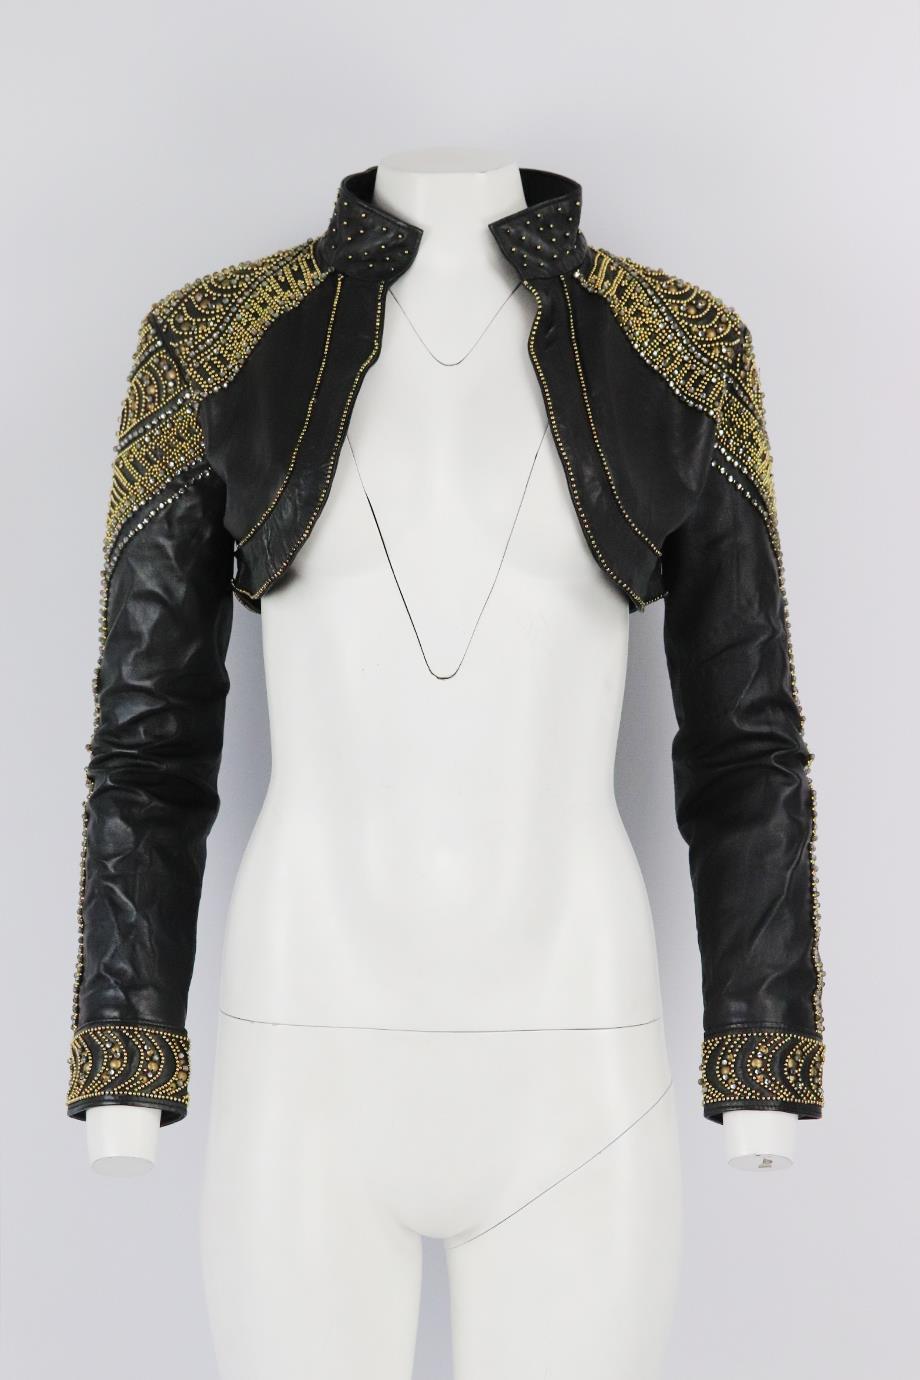 La Perla cropped embellished leather jacket. Black and gold. Long sleeve, v-neck. Slips on. 100% Lambs leather; lining: 100% polyester. Size: IT 44 (UK 12, US 8, FR 40). Shoulder to shoulder: 17 in. Bust: 36 in. Length: 10.75 in
